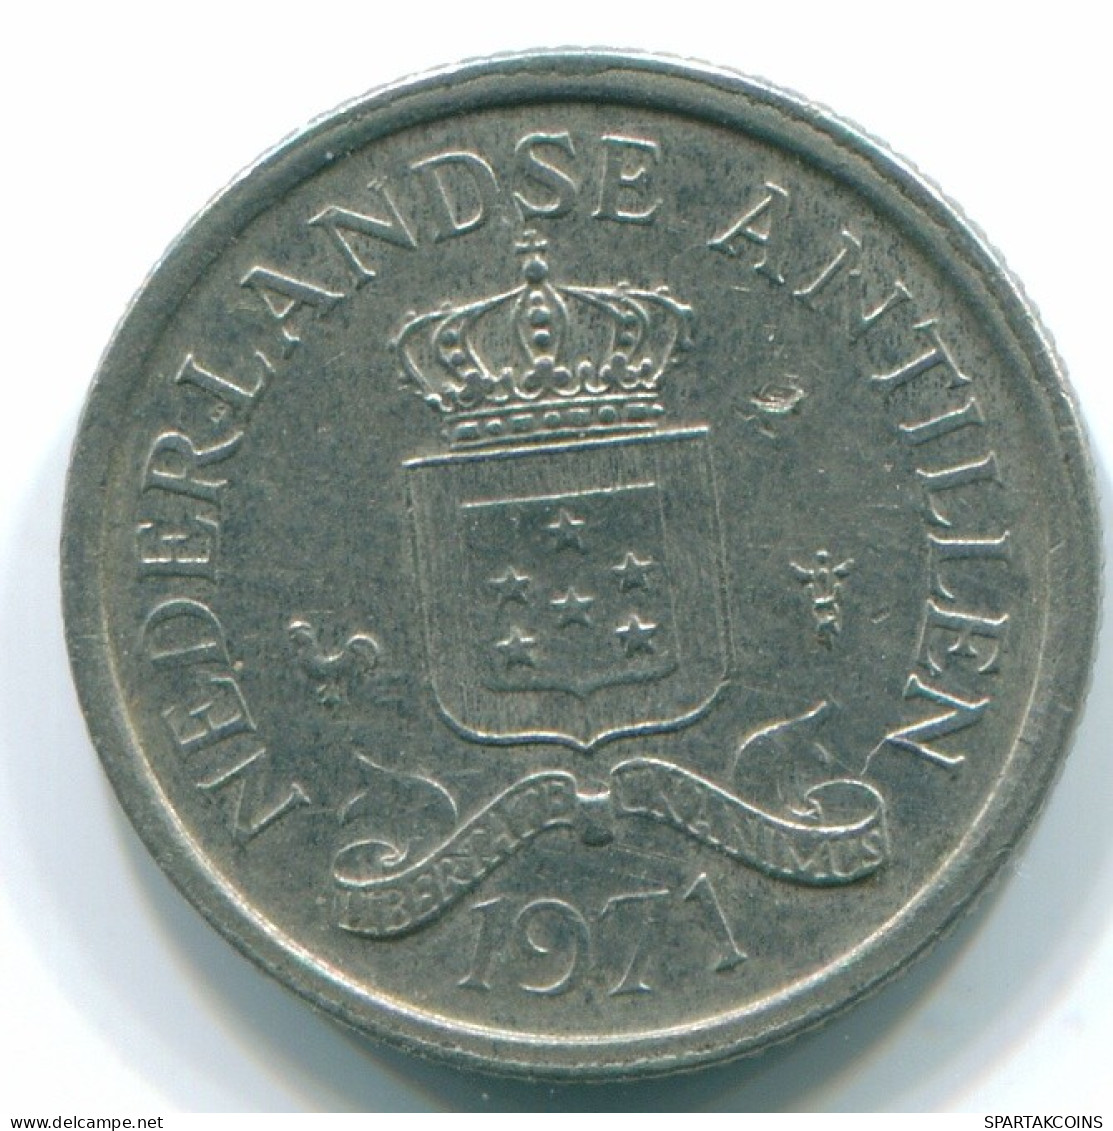 10 CENTS 1971 NIEDERLÄNDISCHE ANTILLEN Nickel Koloniale Münze #S13400.D.A - Netherlands Antilles